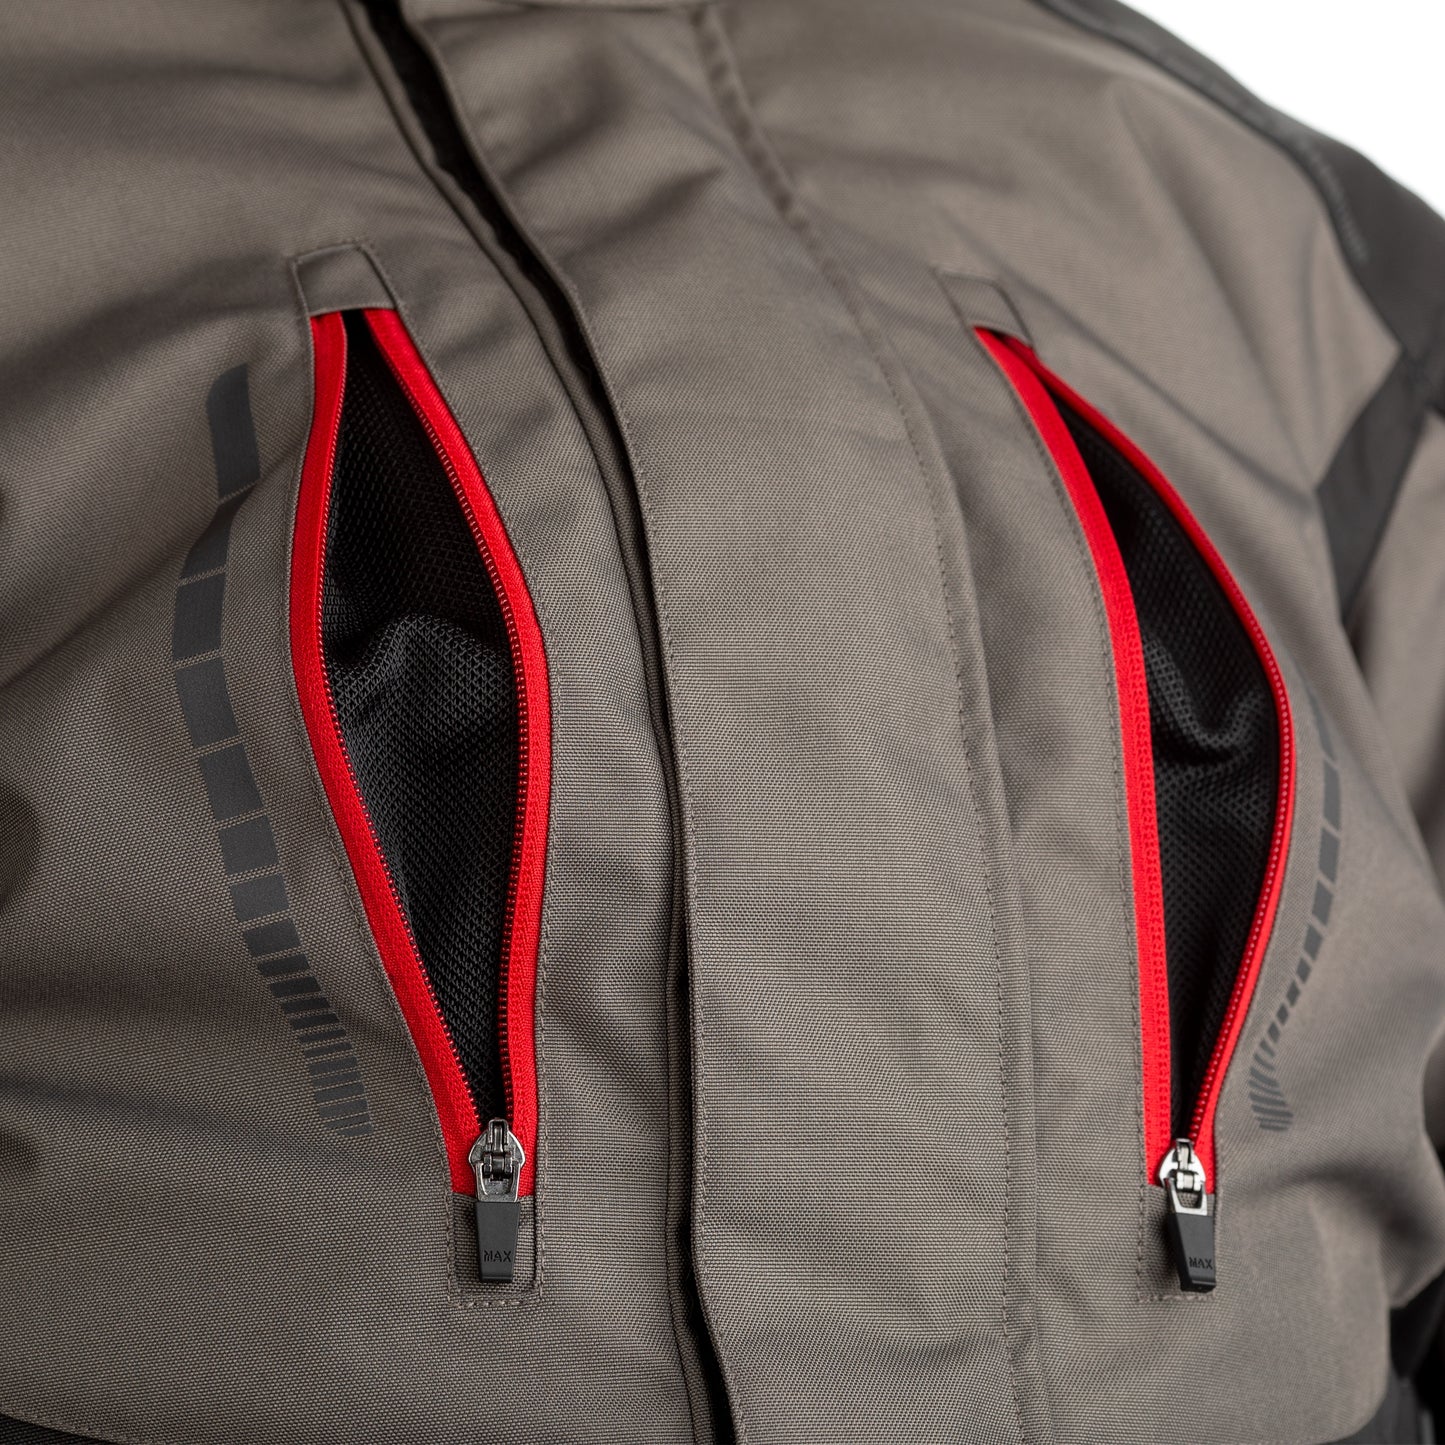 RST Atlas CE Men's Waterproof Textile Jacket - Grey / Black / Red (2366)